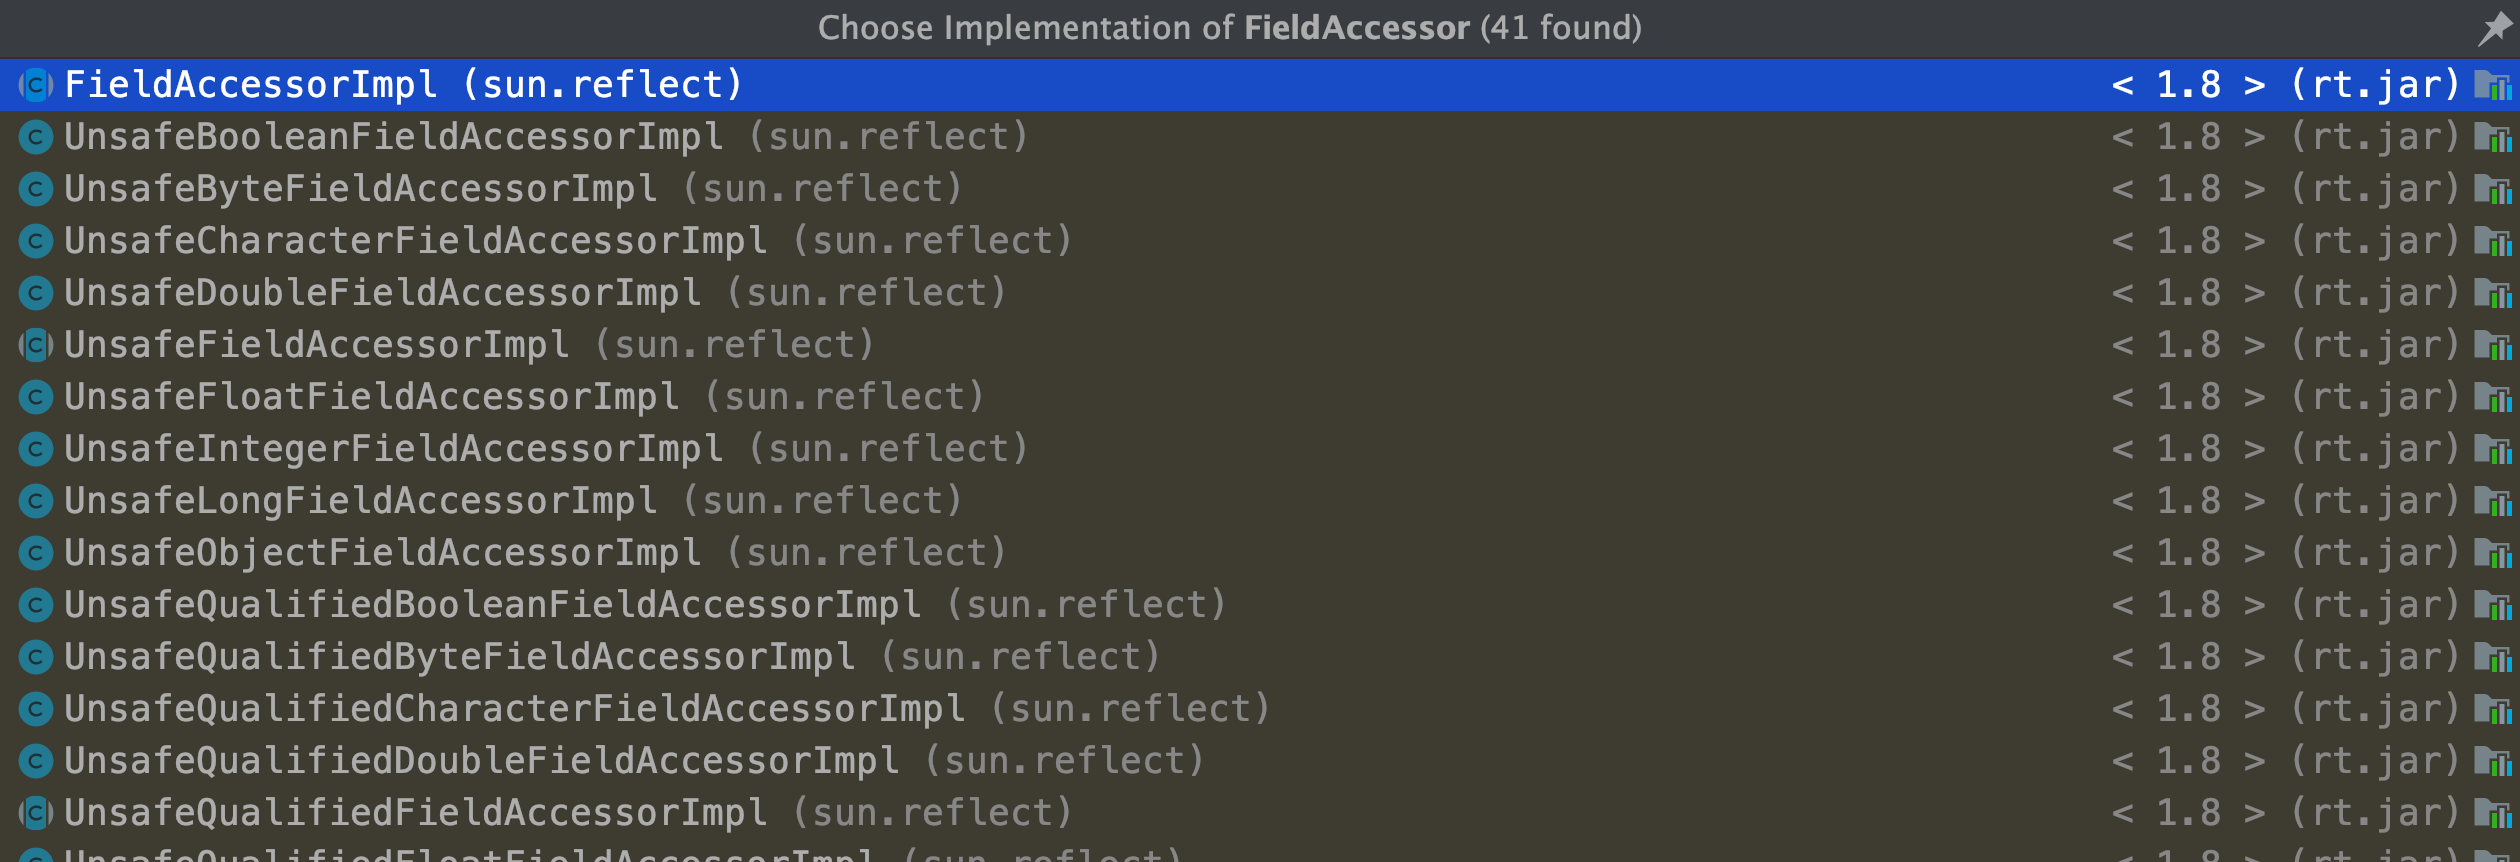 fieldaccessor_implements.png